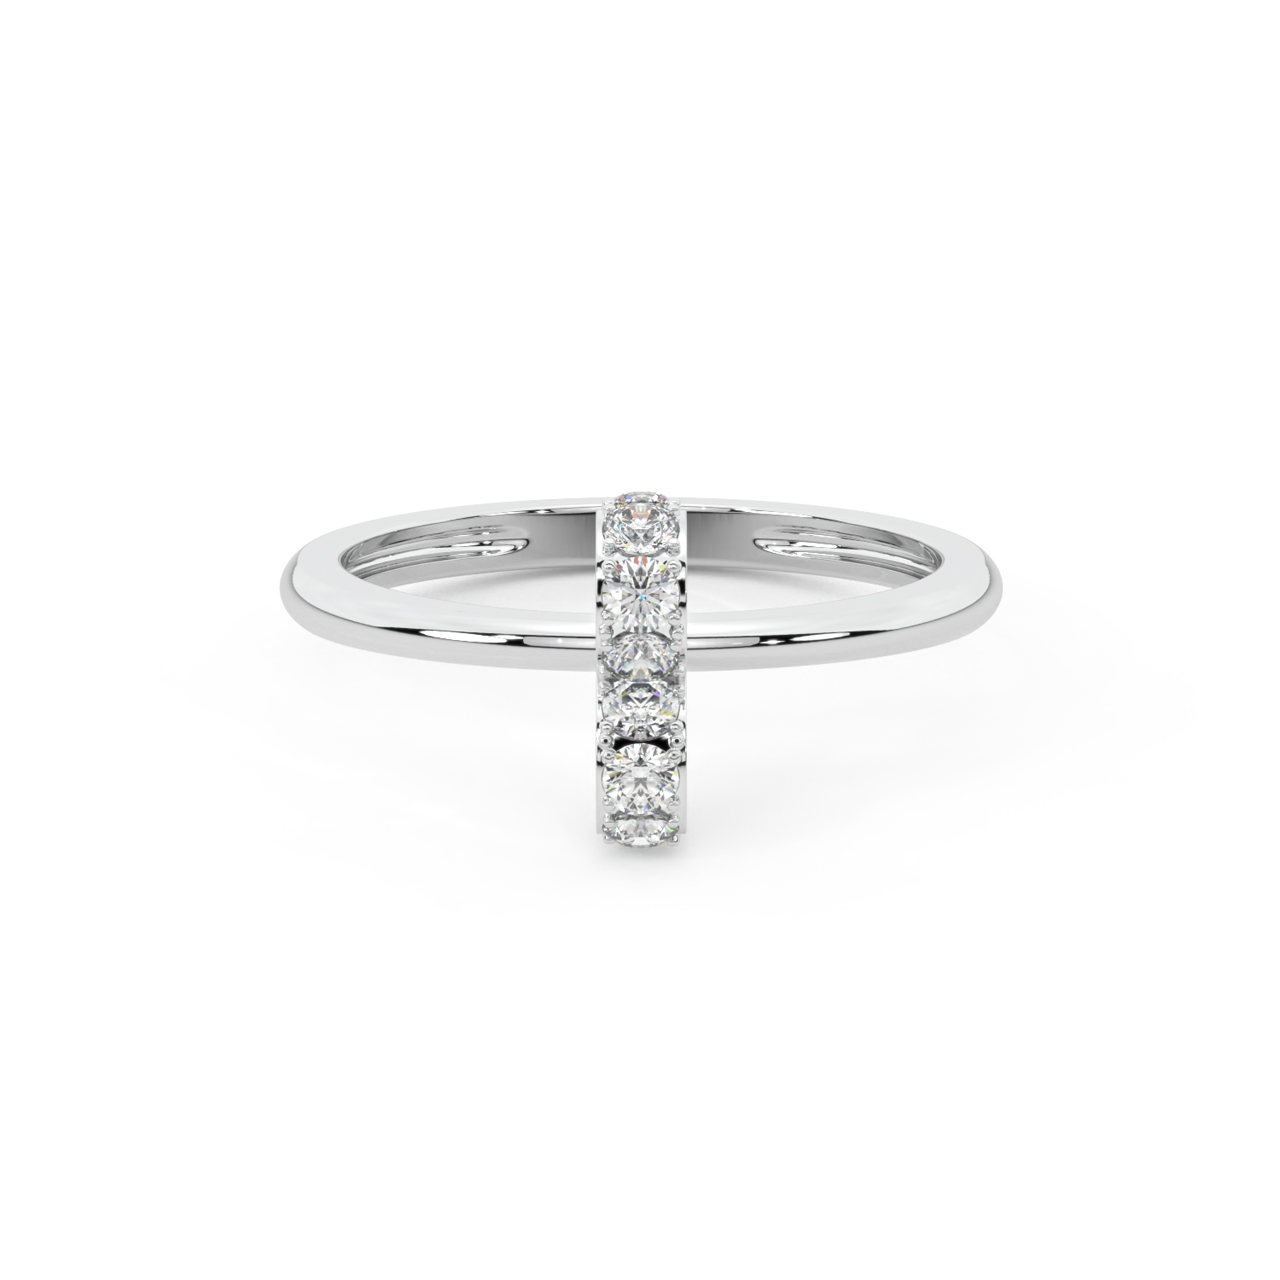 Delicate Heart Shaped Diamond Ring